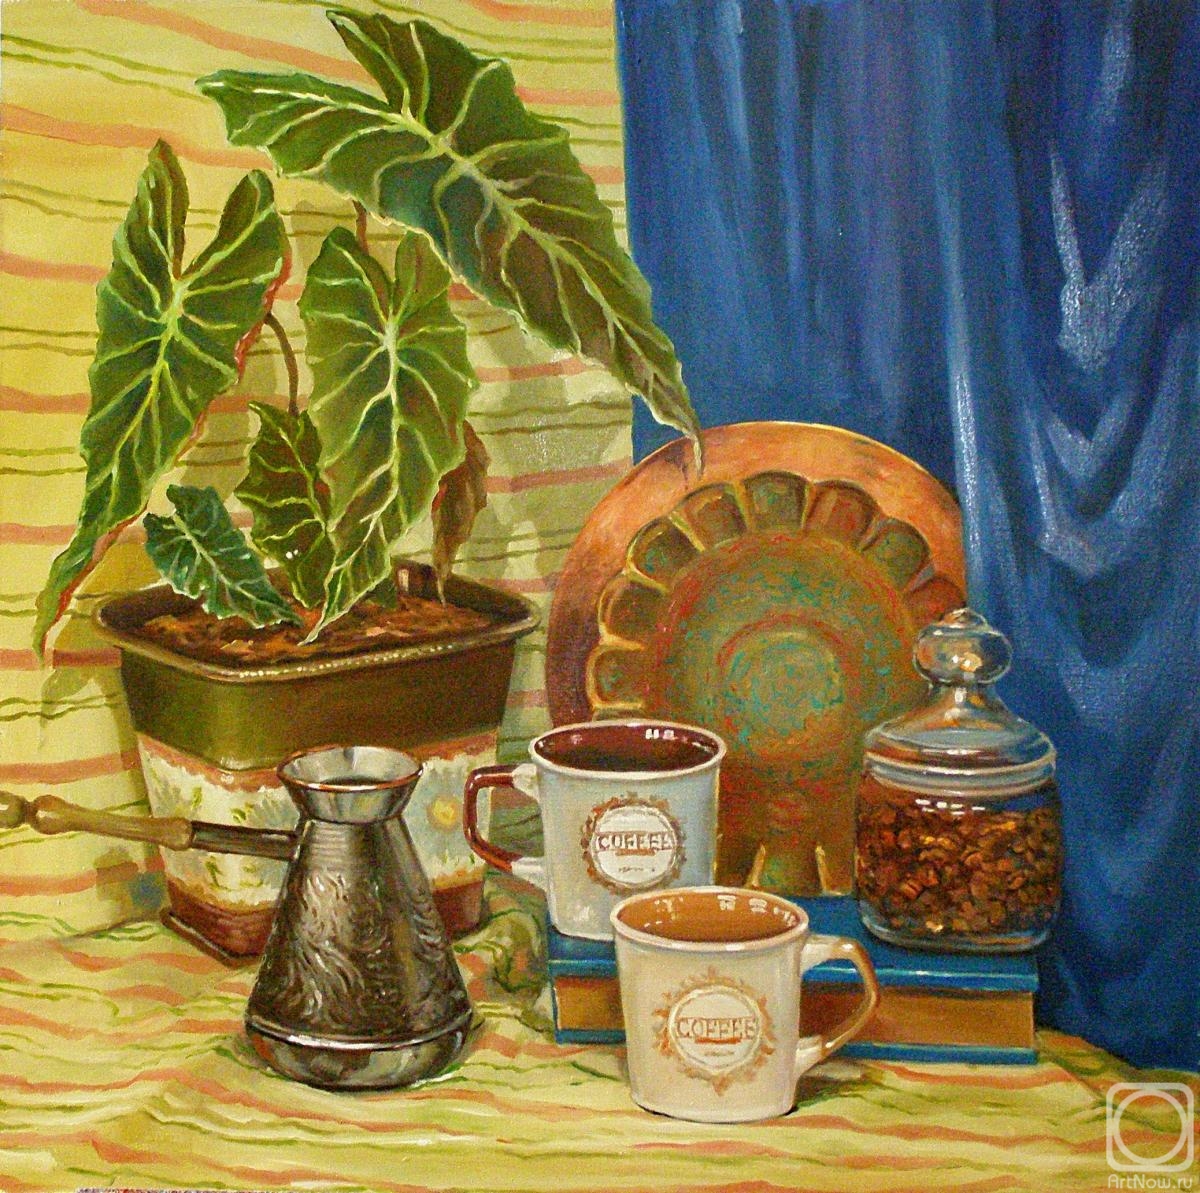 Mishchenko-Sapsay Svetlana. Coffee composition with alocasia